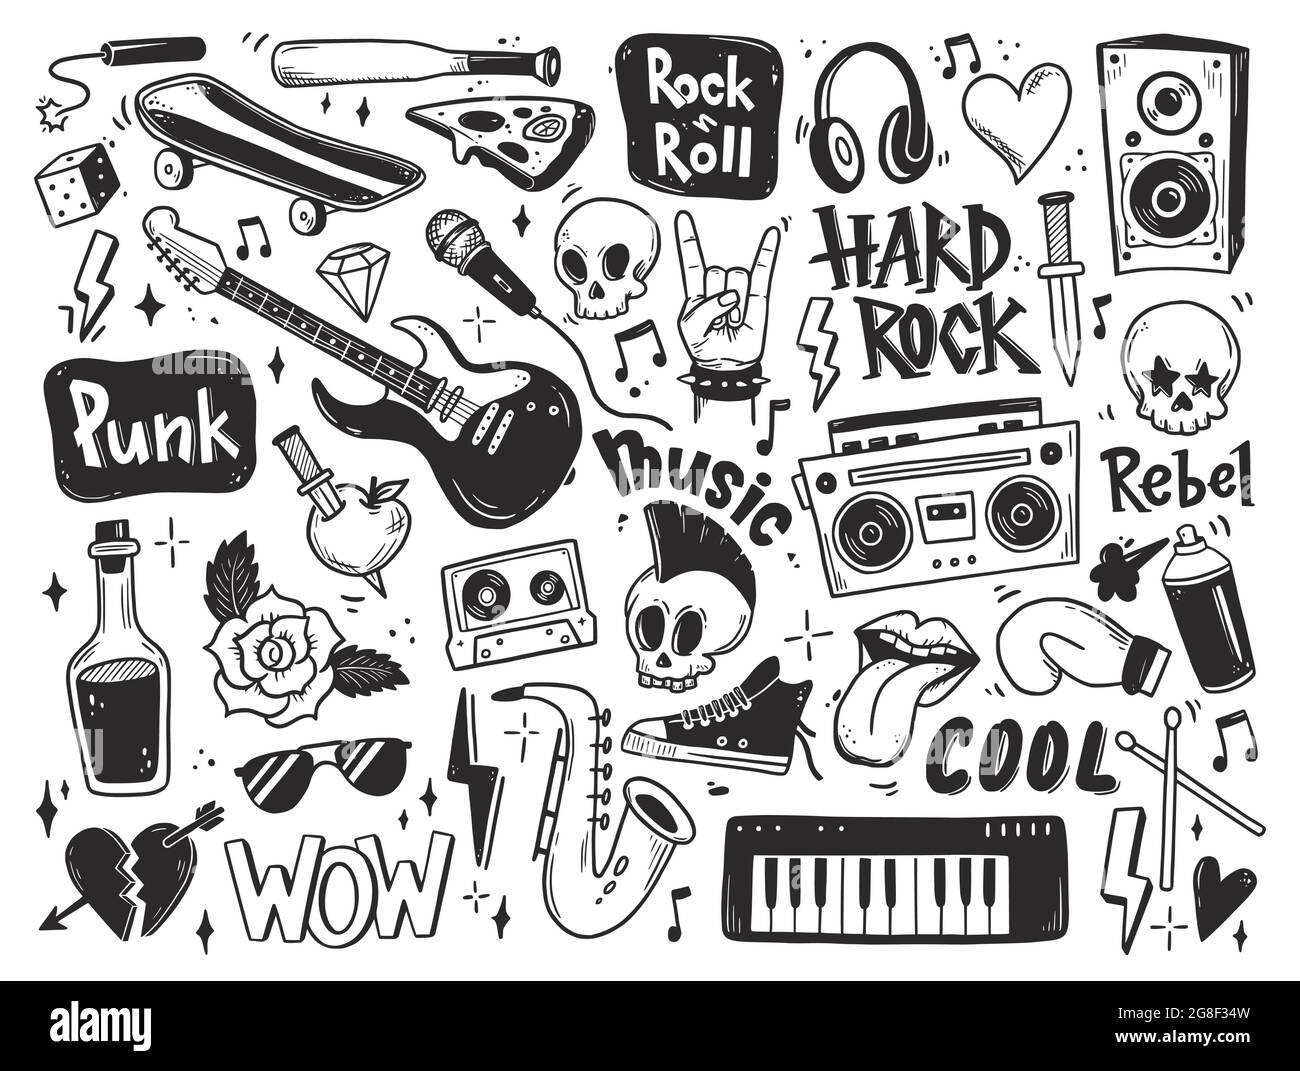 Punk tattoos cool rock Goth &